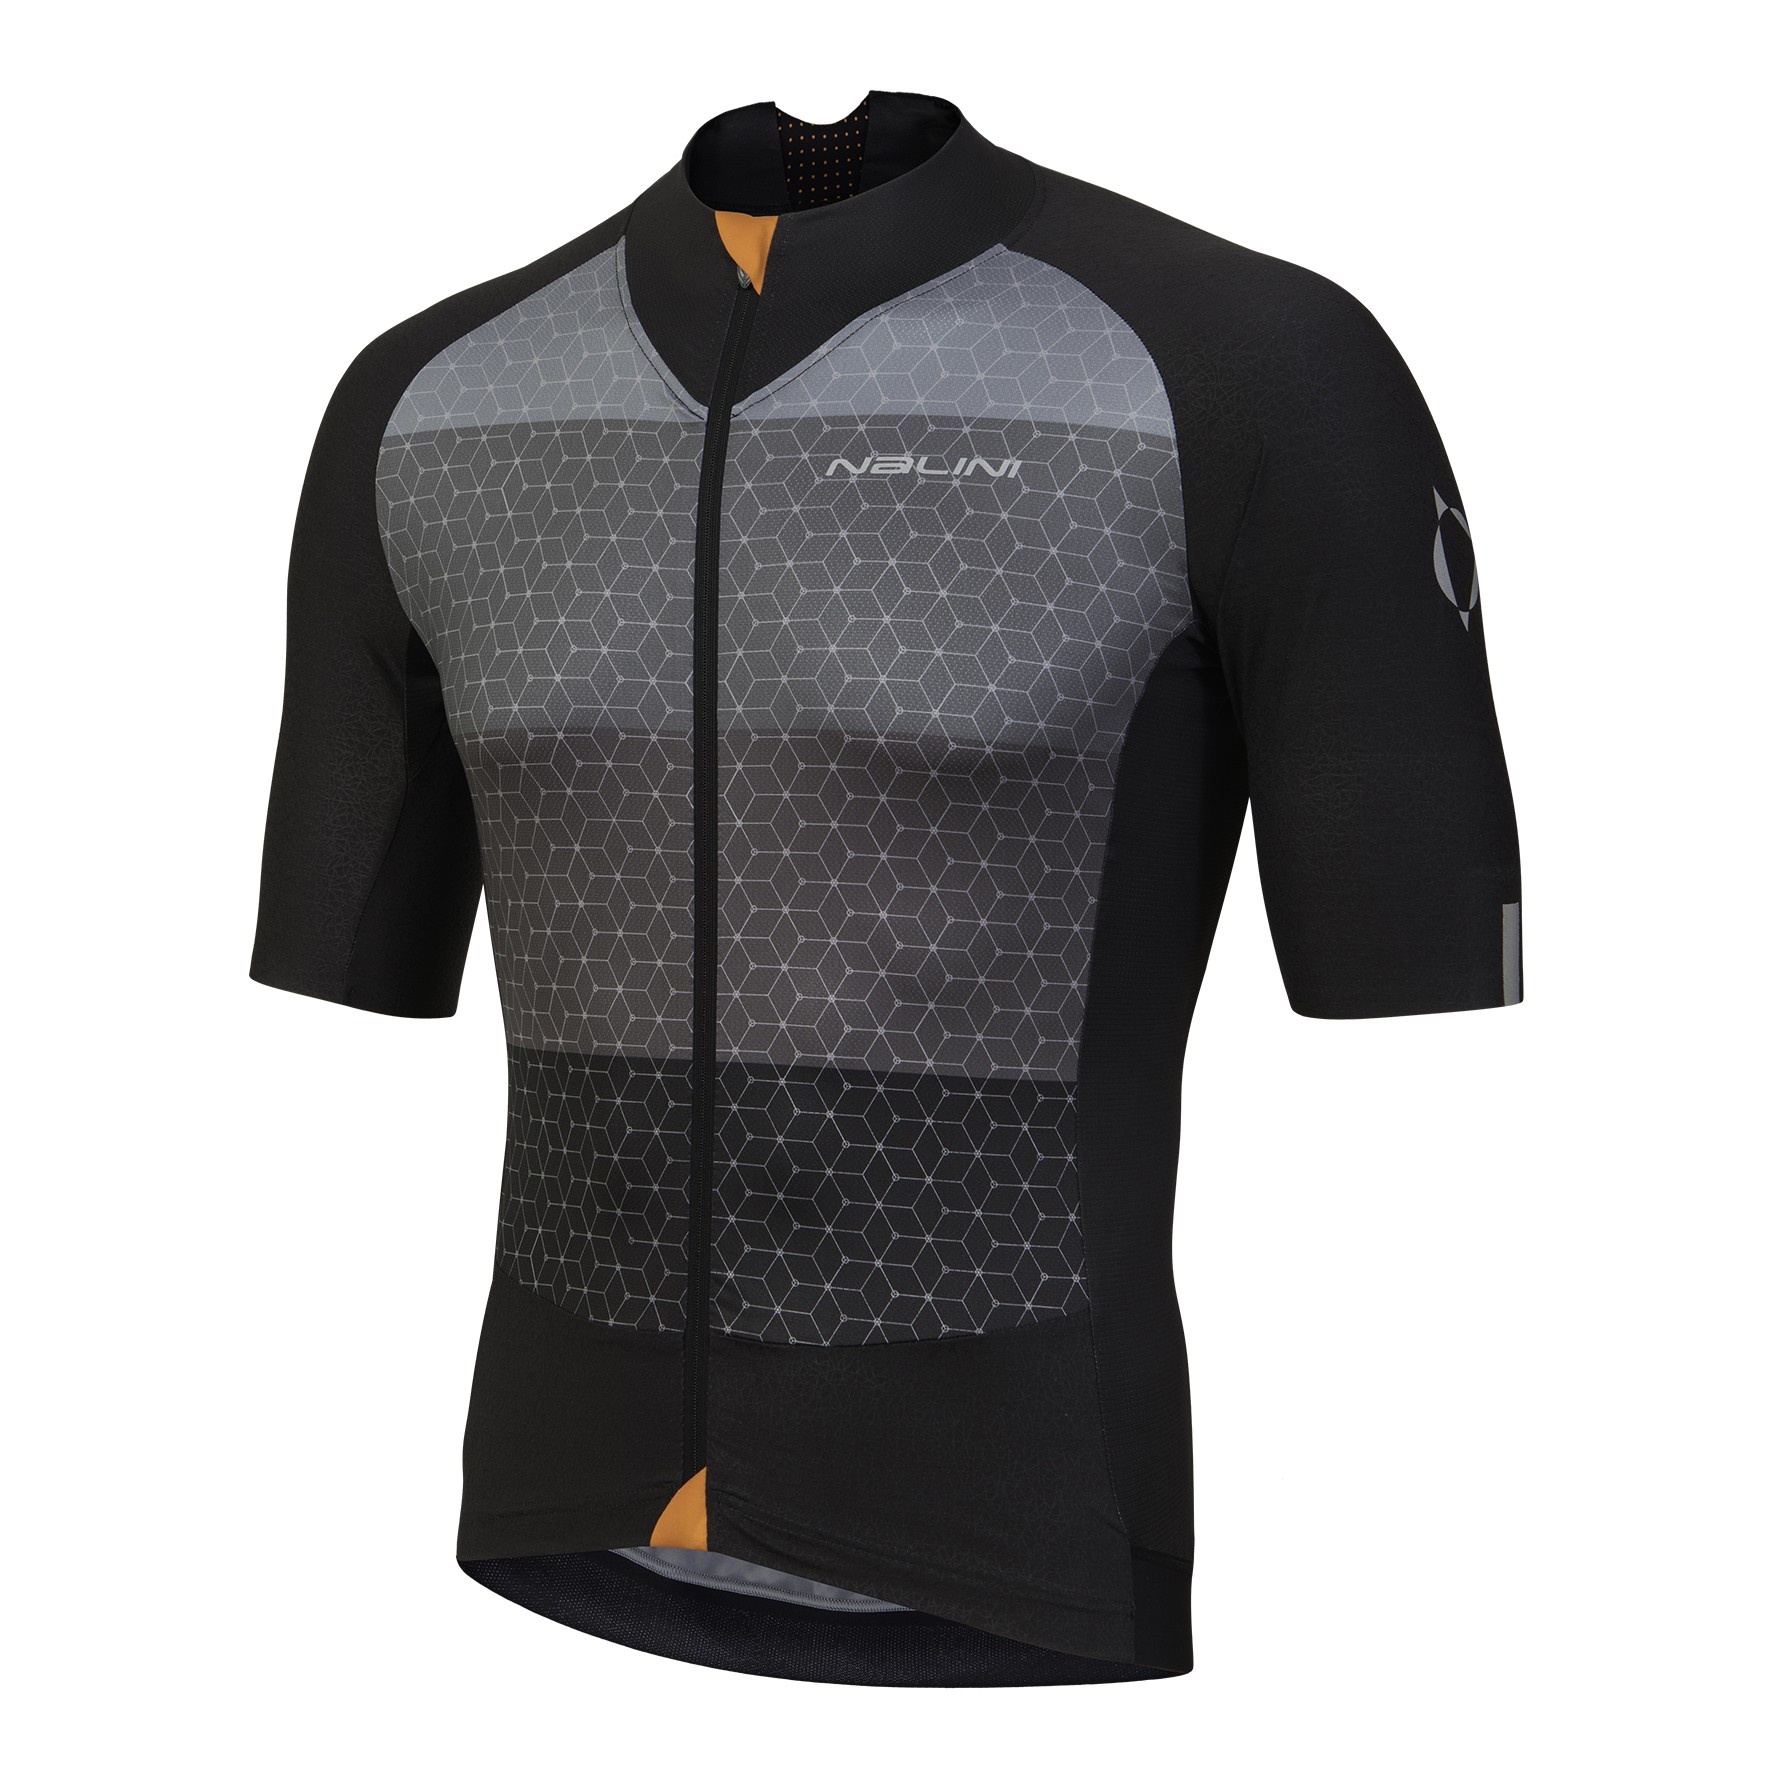 Nalini stelvio cycling jersey short sleeves black grey